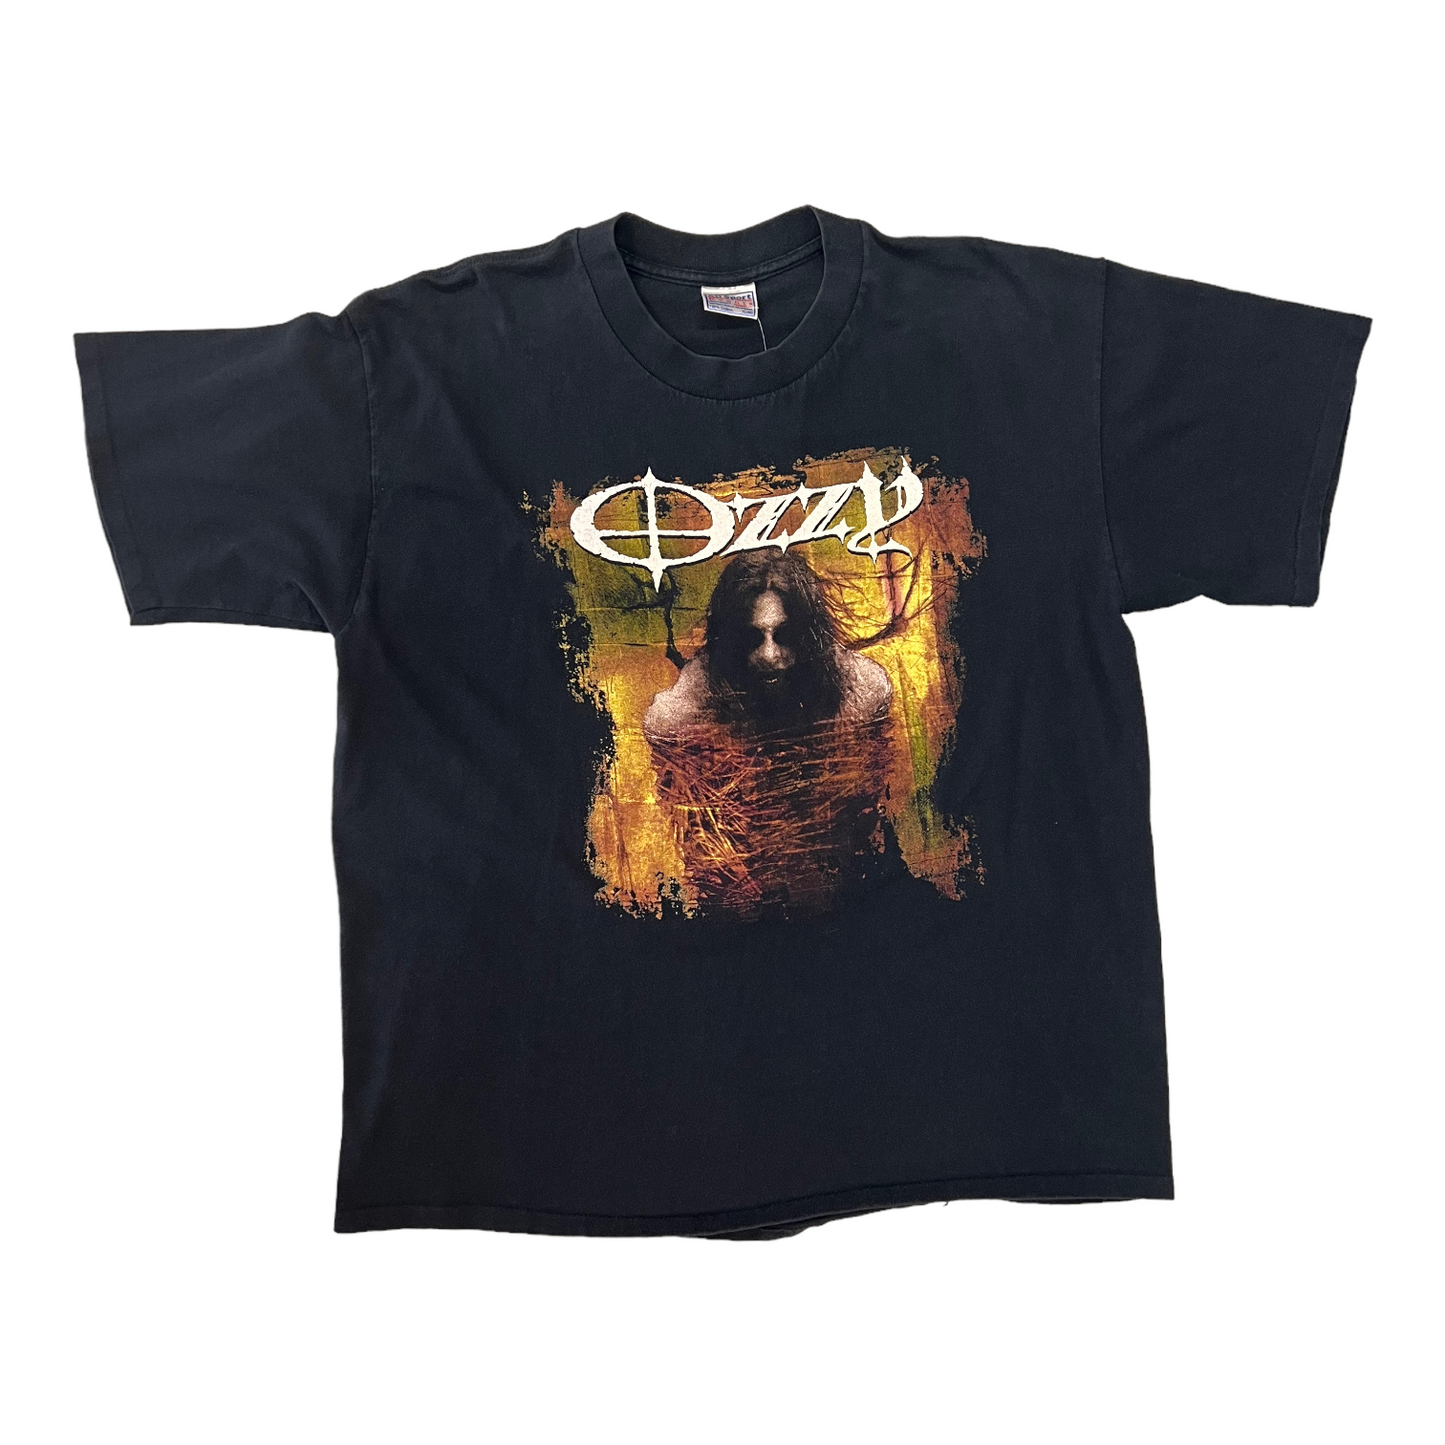 2000 Ozzy Osborne “Ozzy Ozzfest” Vintage Tee XL